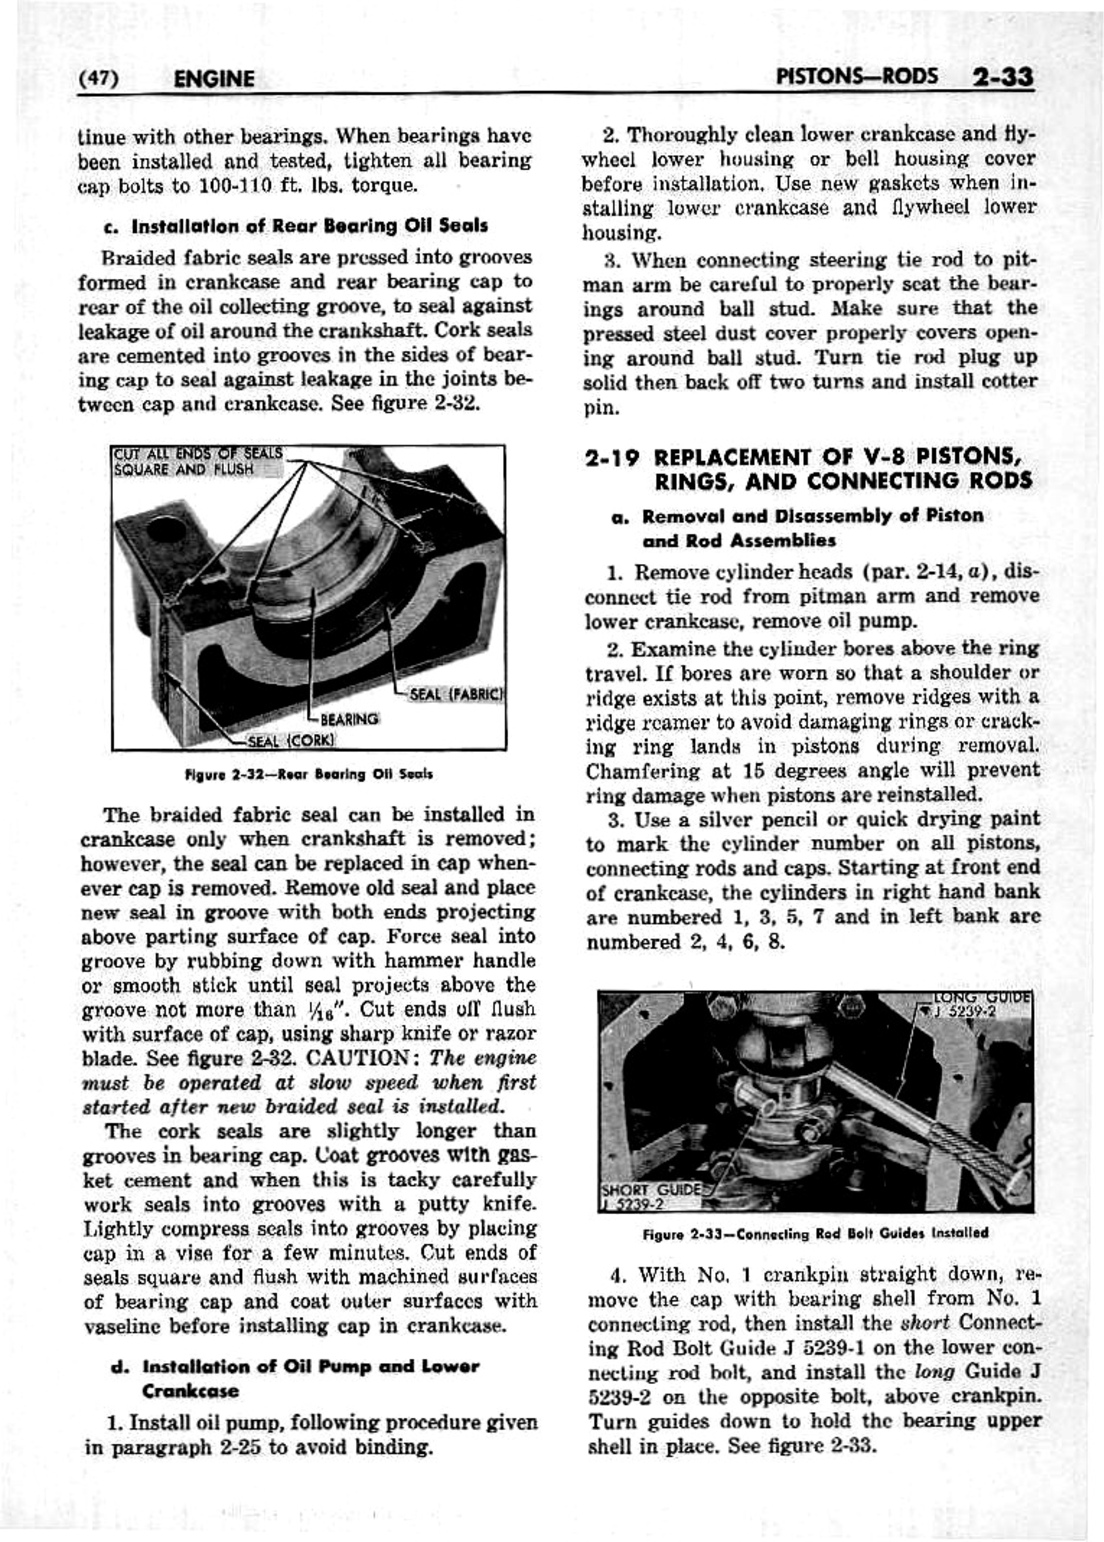 n_03 1953 Buick Shop Manual - Engine-033-033.jpg